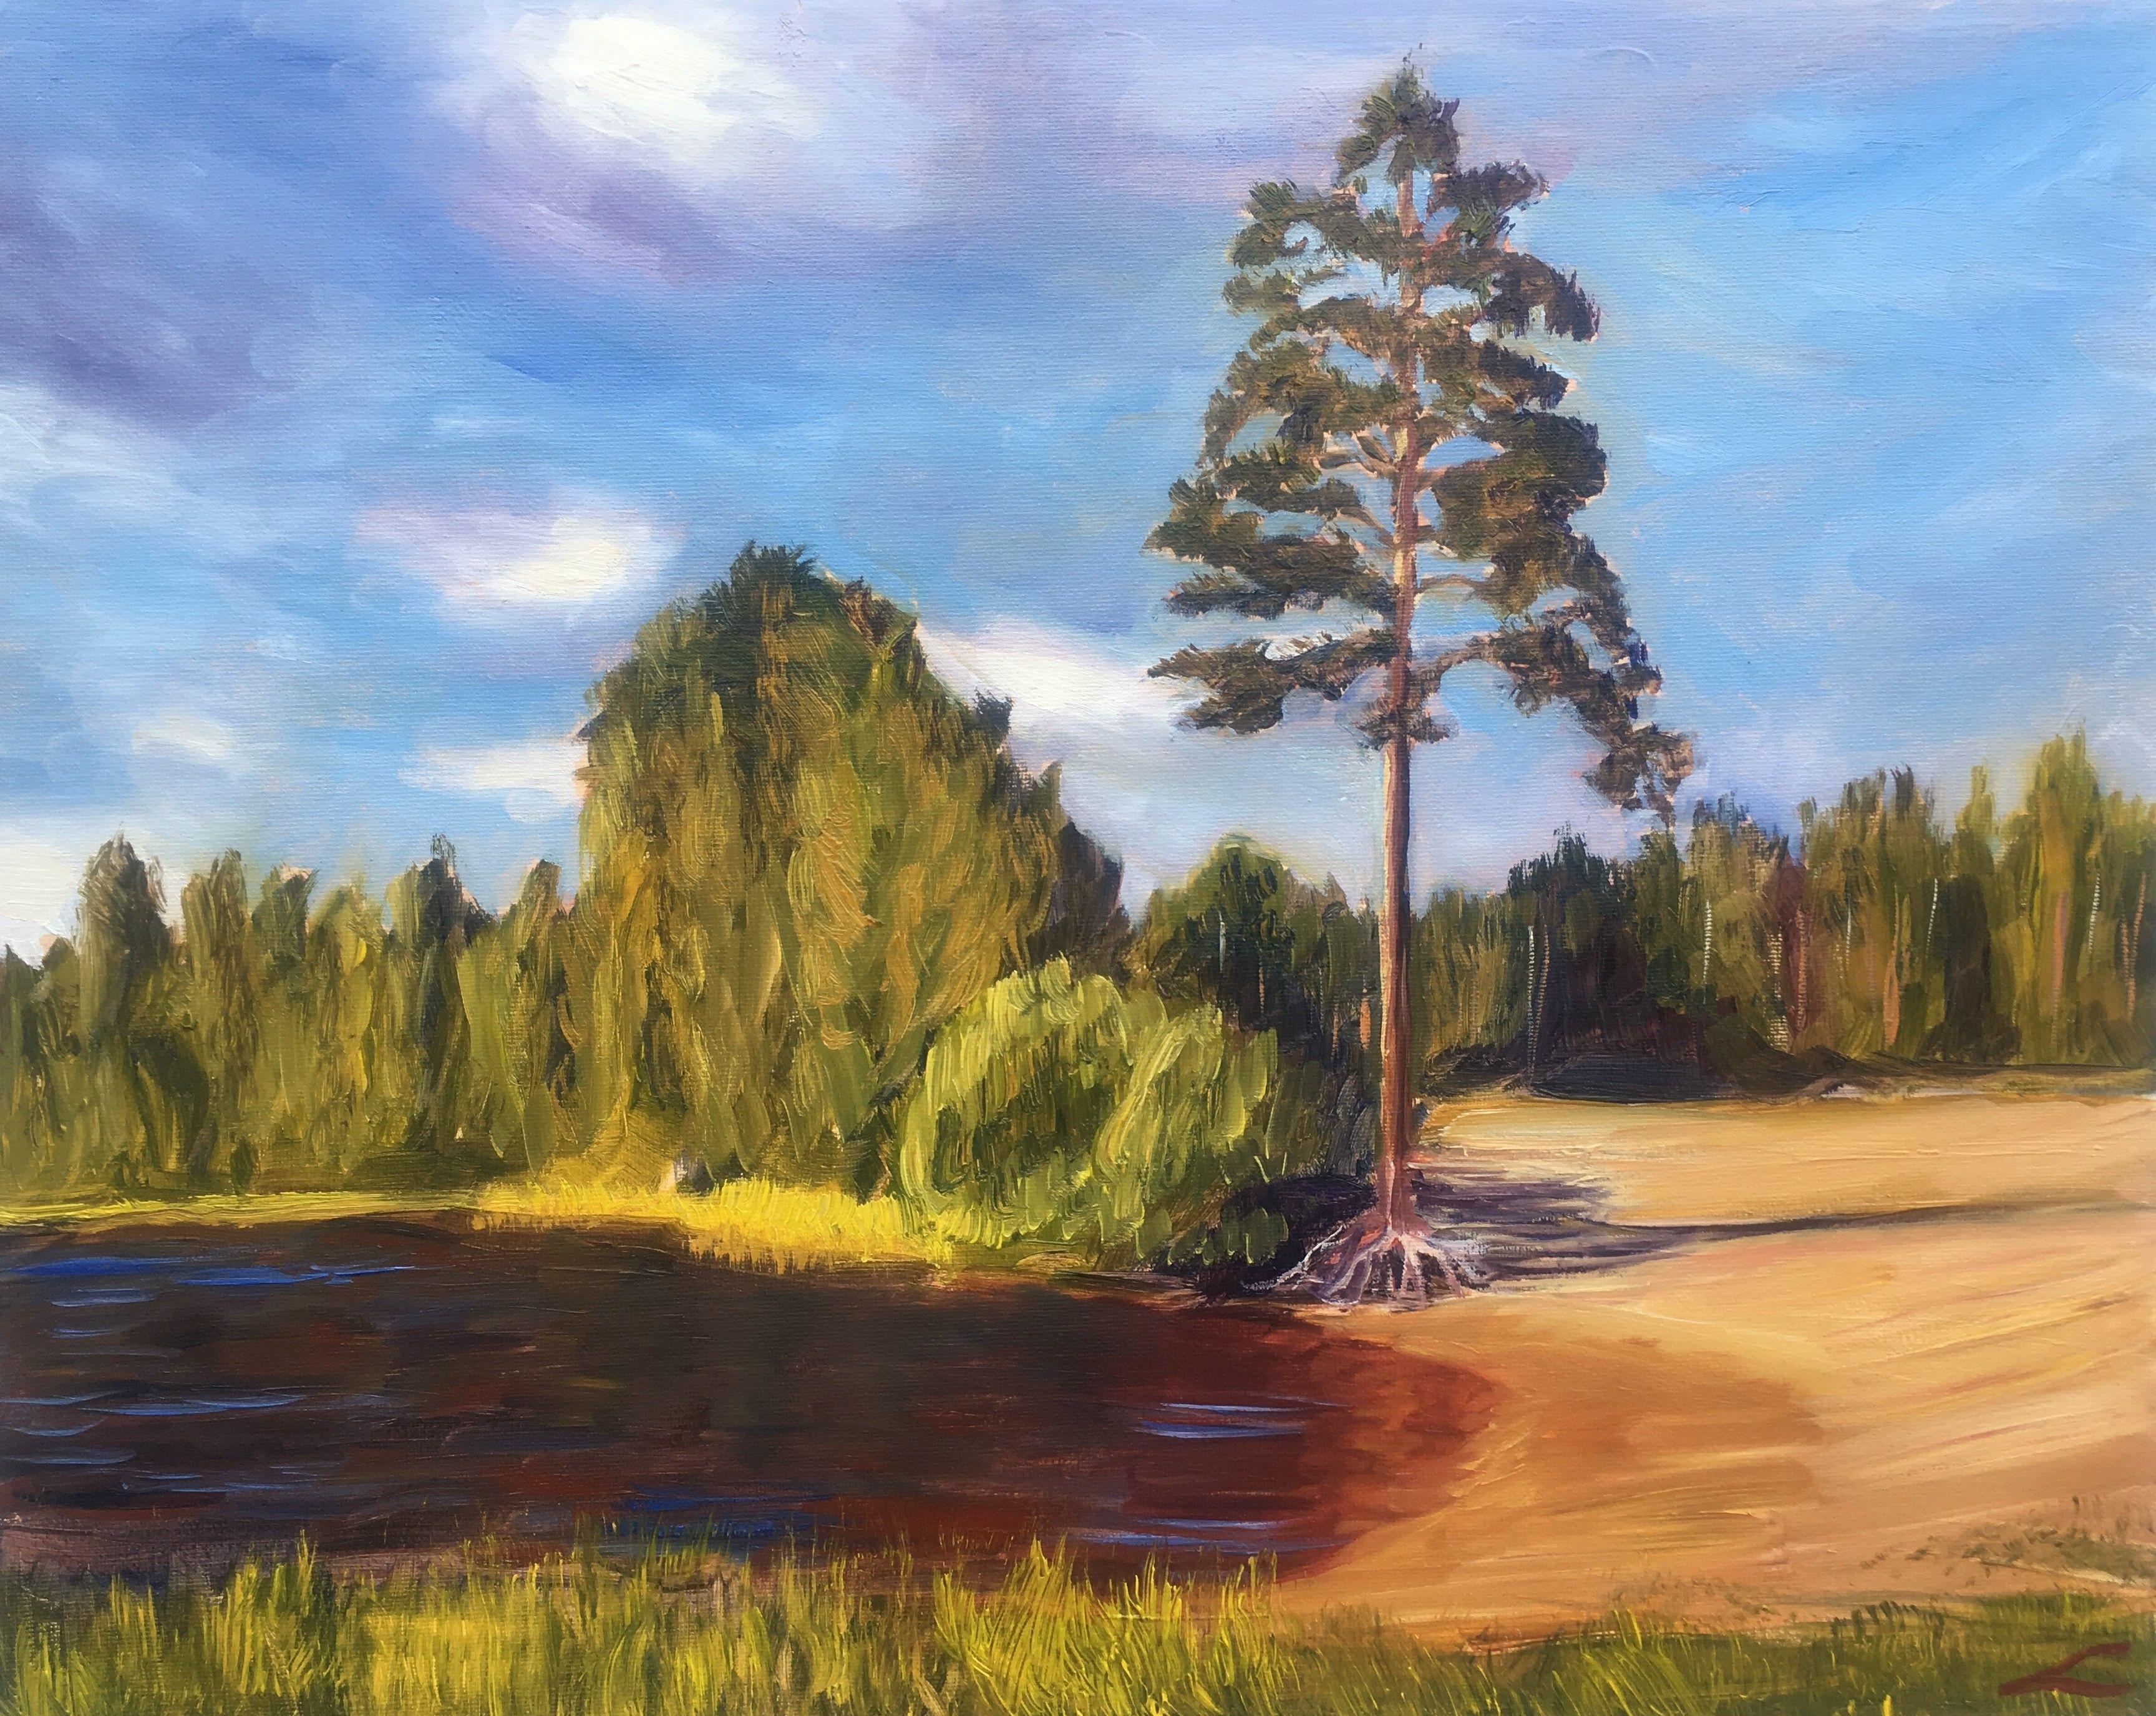 Elena Sokolova Landscape Painting - Pastors lake pine, Painting, Oil on Canvas